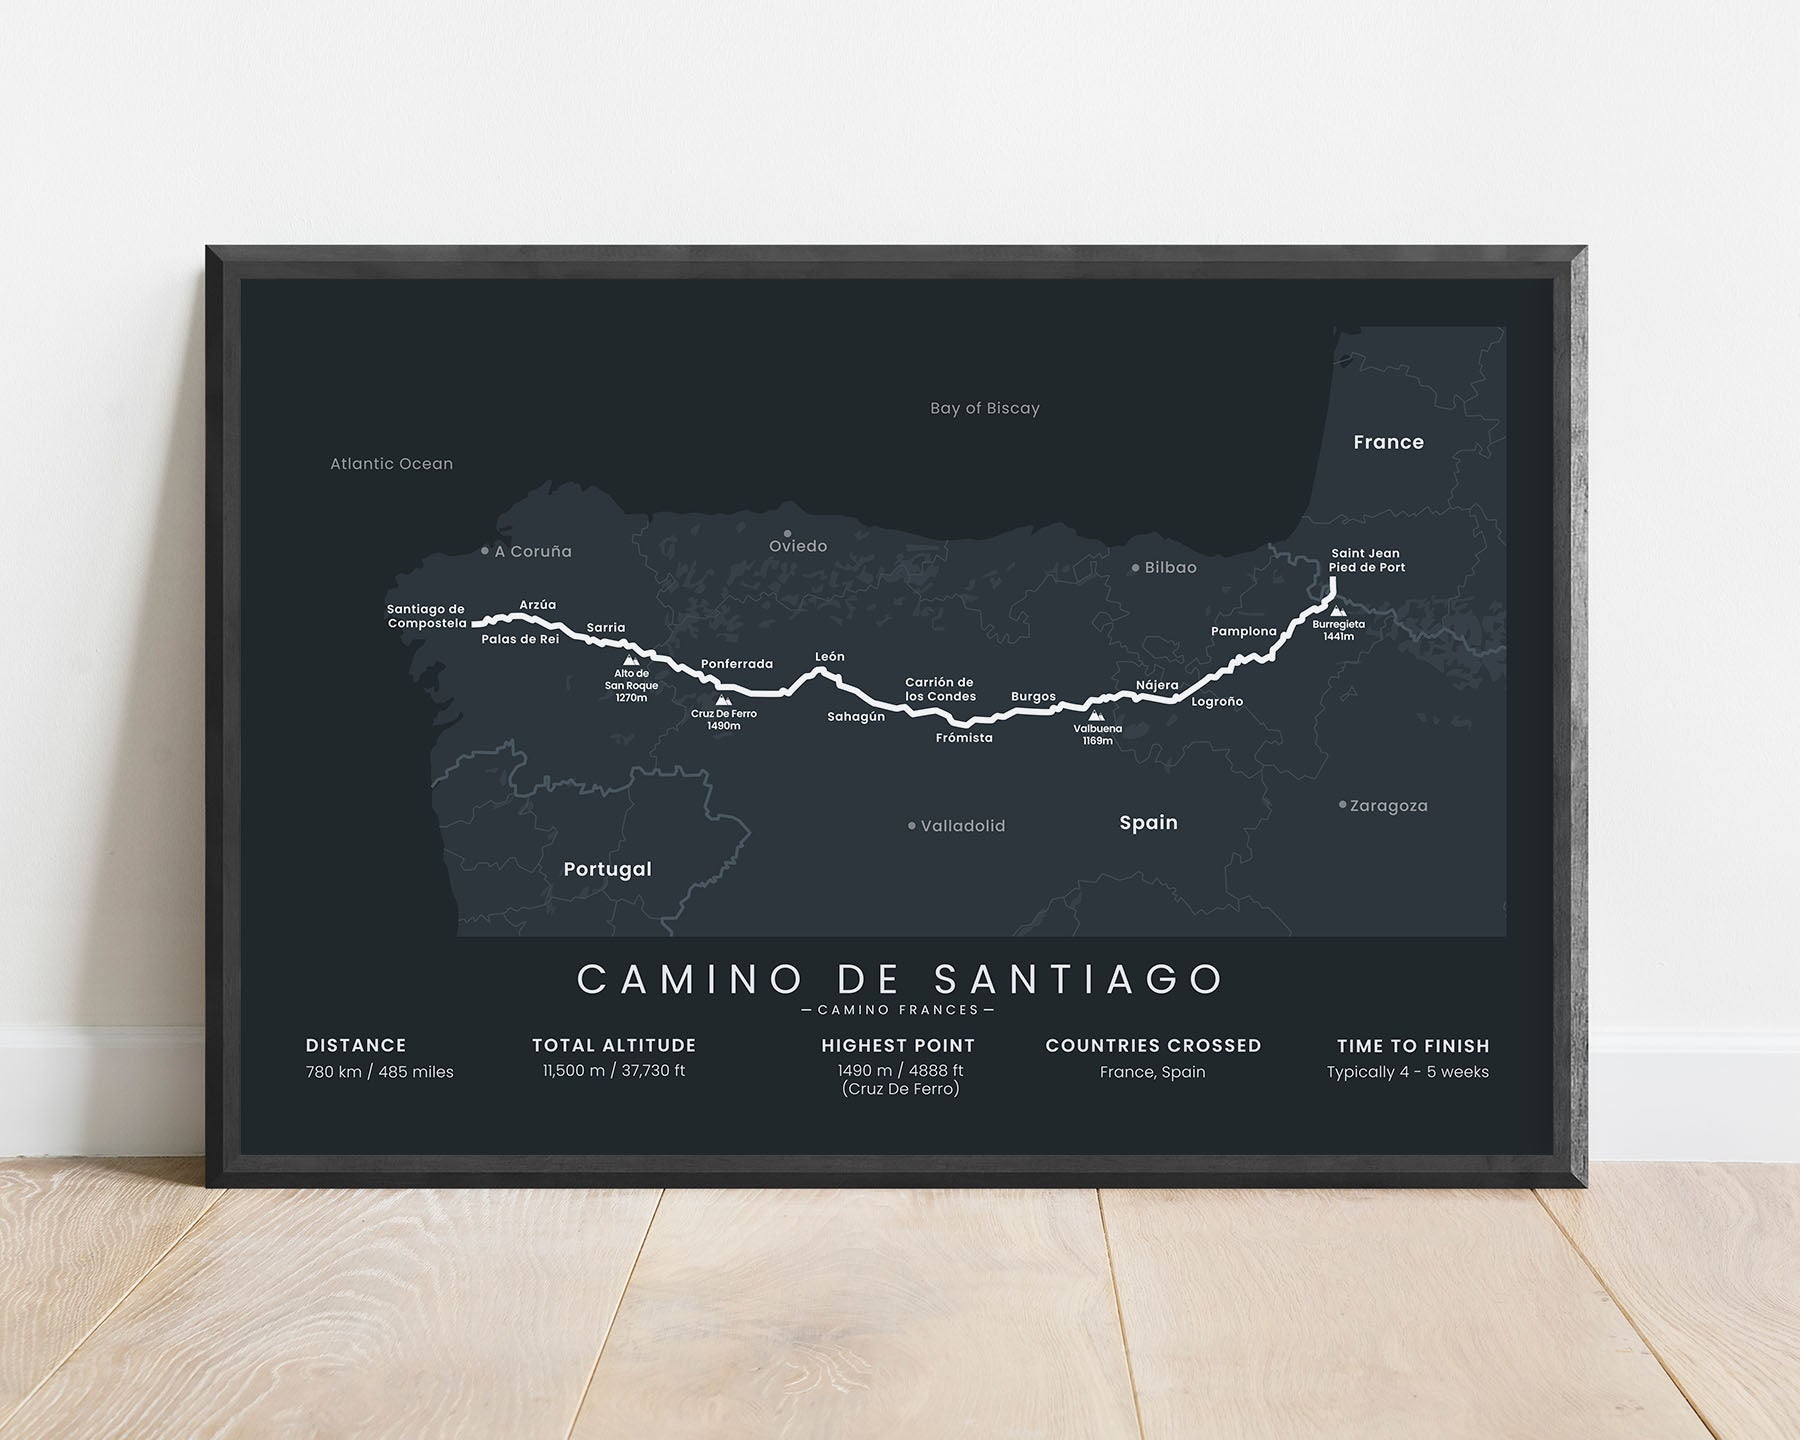 Camino Frances (Saint James Way) Spain & France long-distance path print with black background